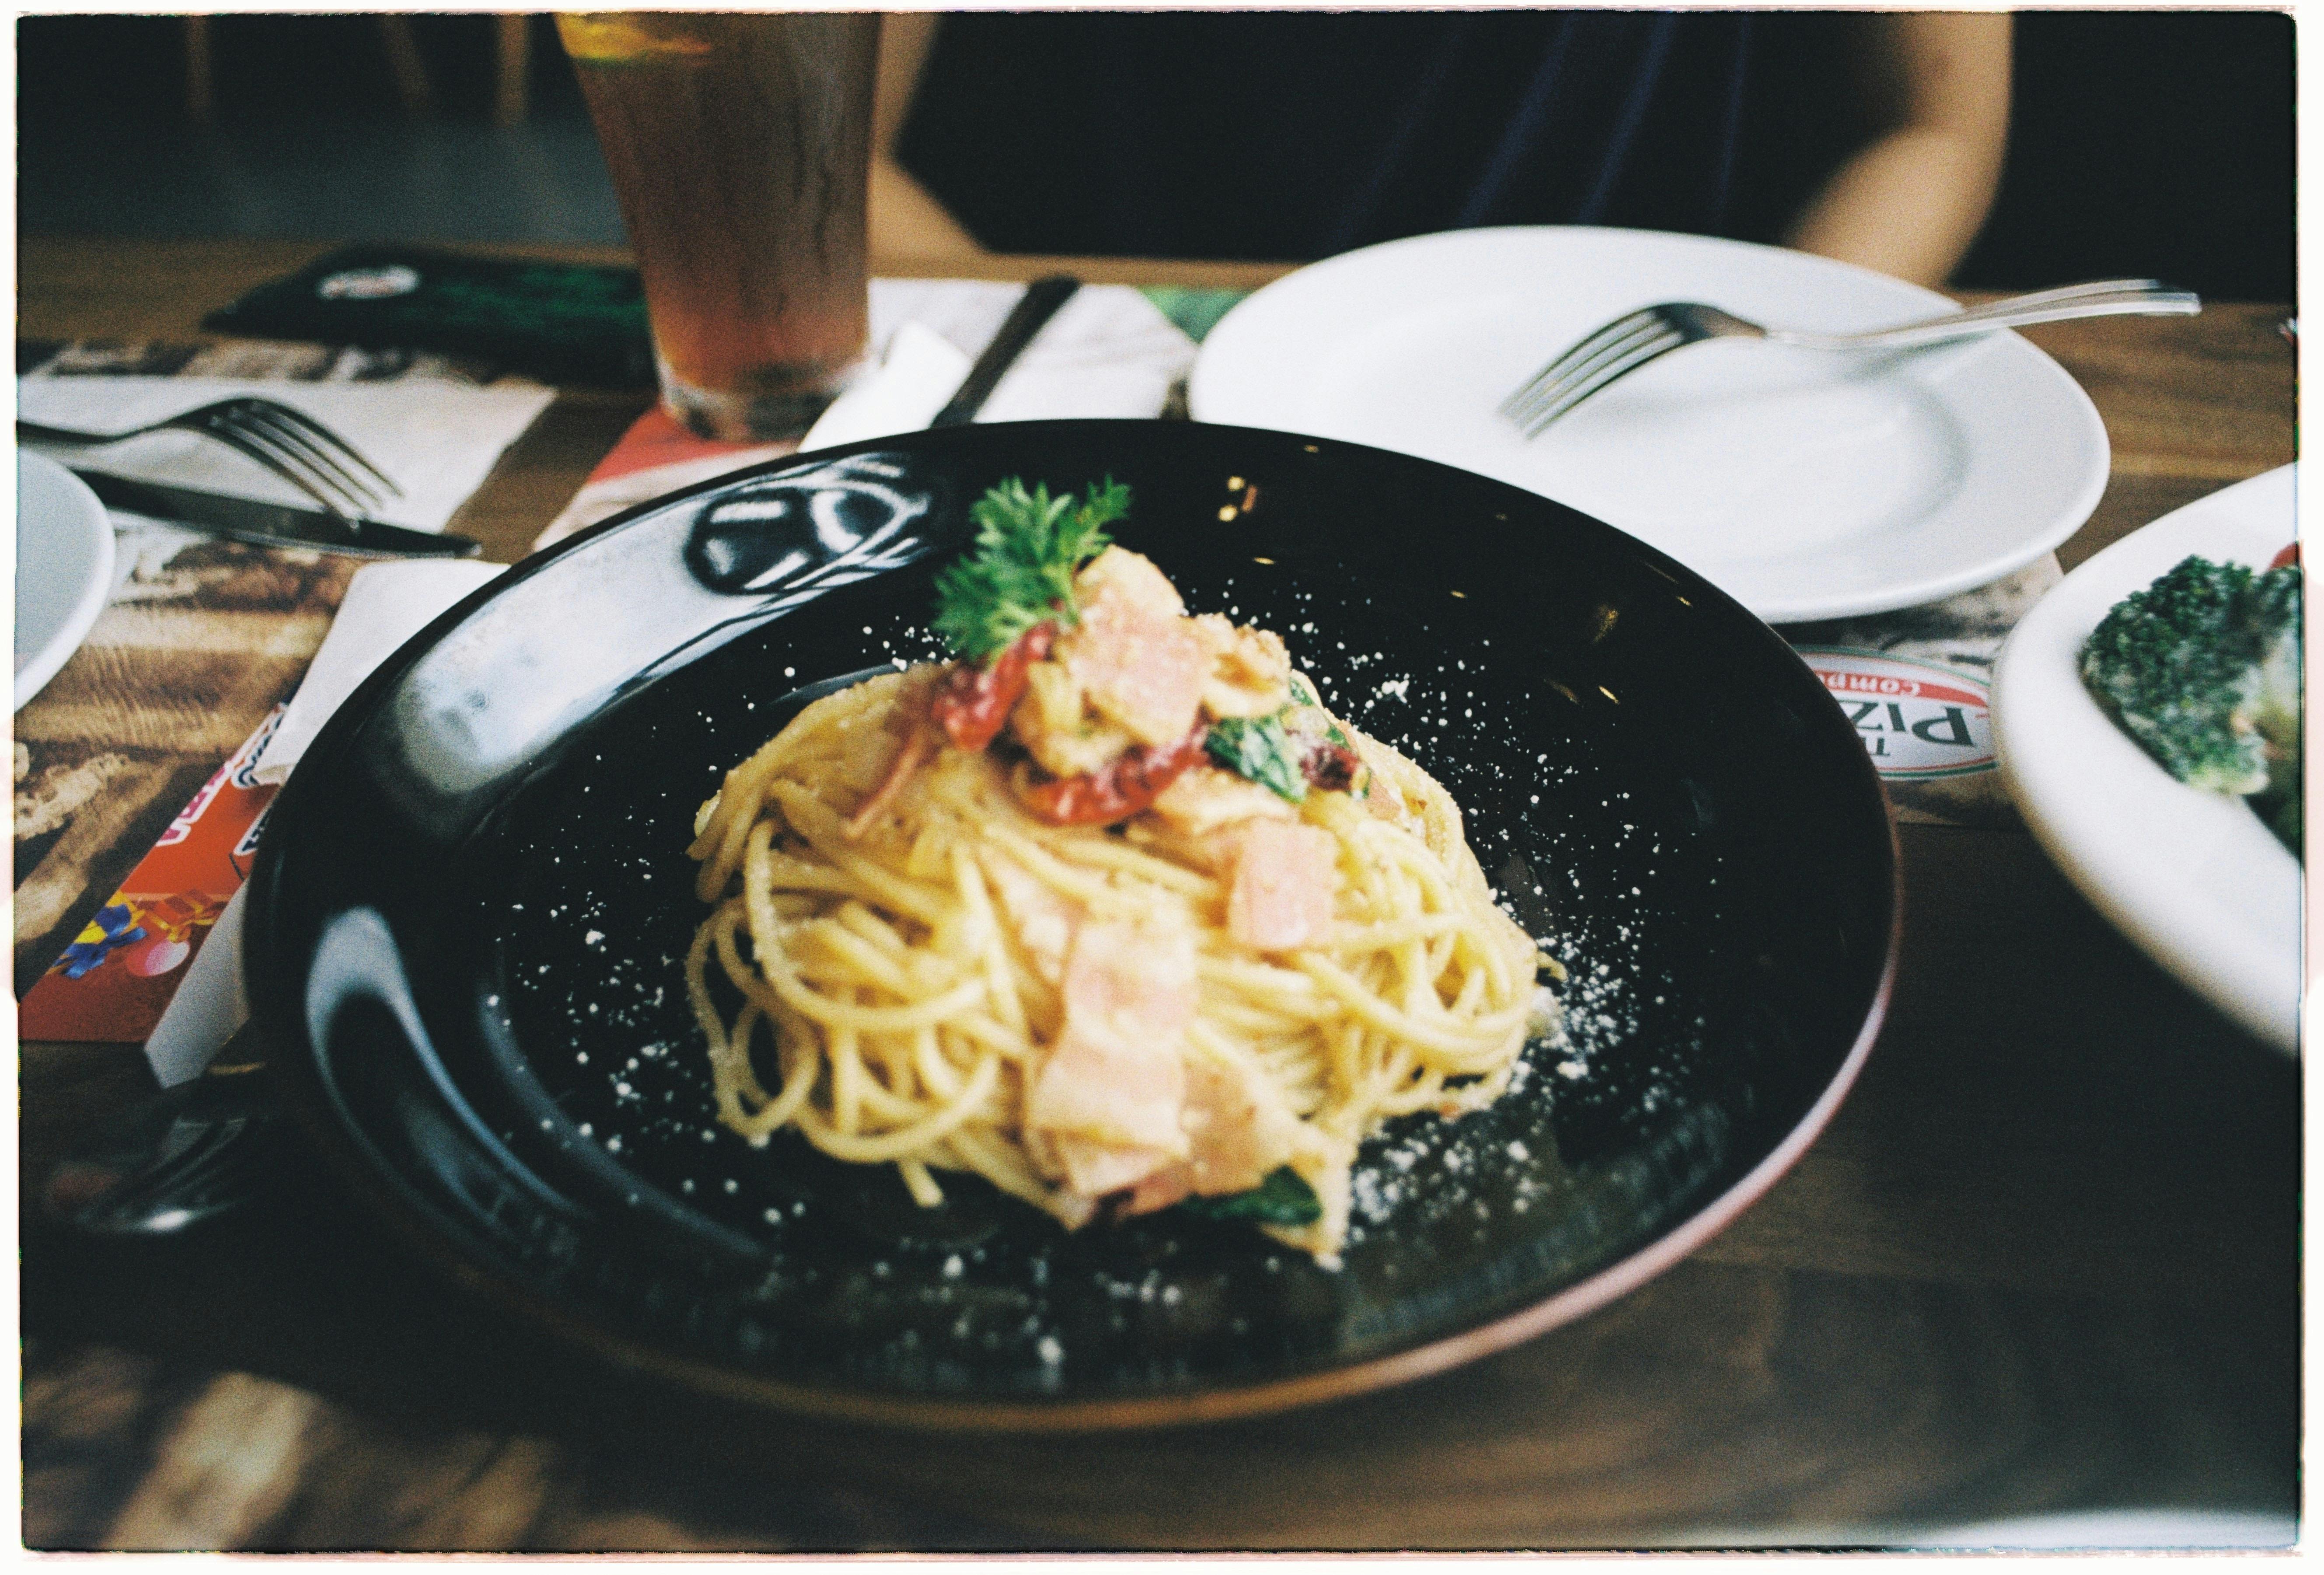 Tortellini on Plate Beside String · Free Stock Photo